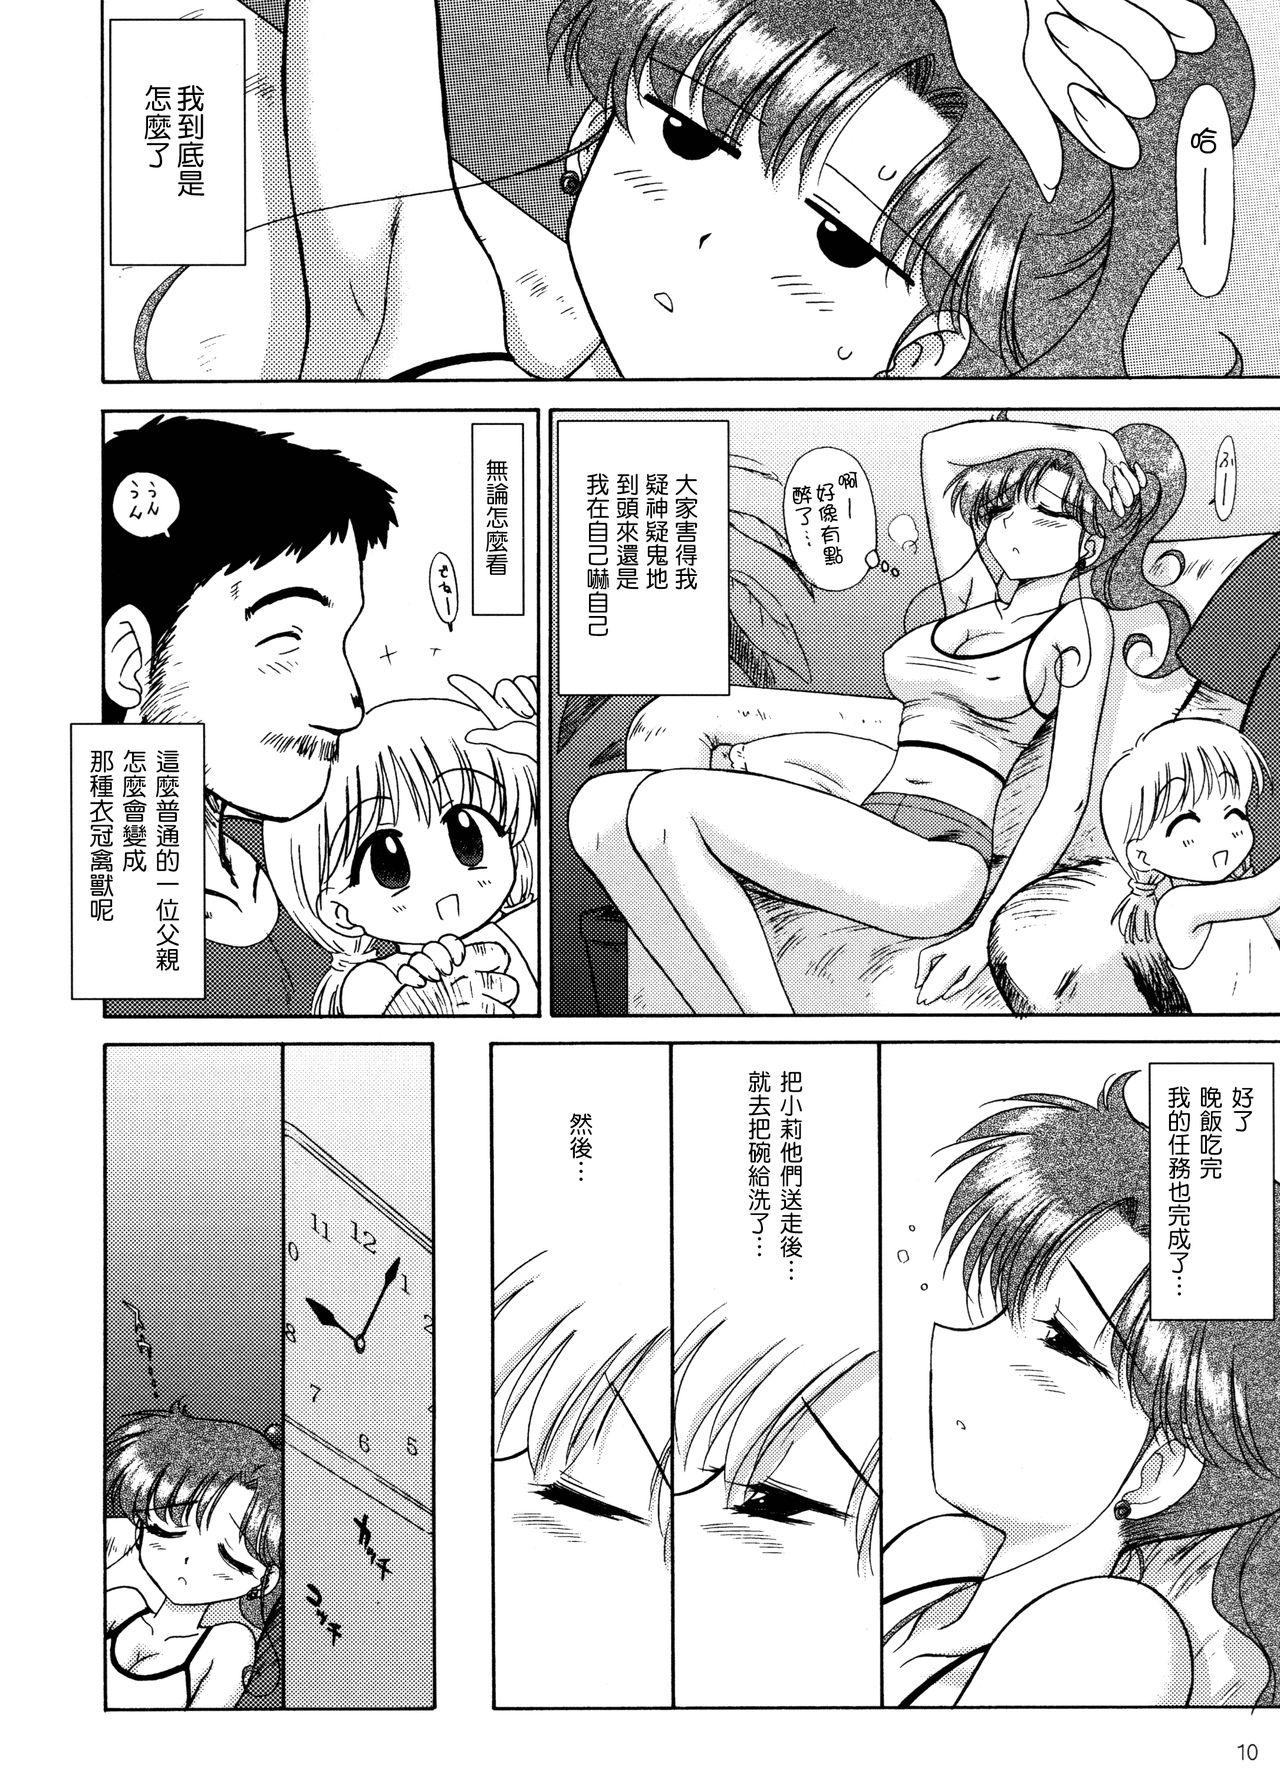 Hot Women Fucking IN A SILENT WAY - Sailor moon | bishoujo senshi sailor moon People Having Sex - Page 10